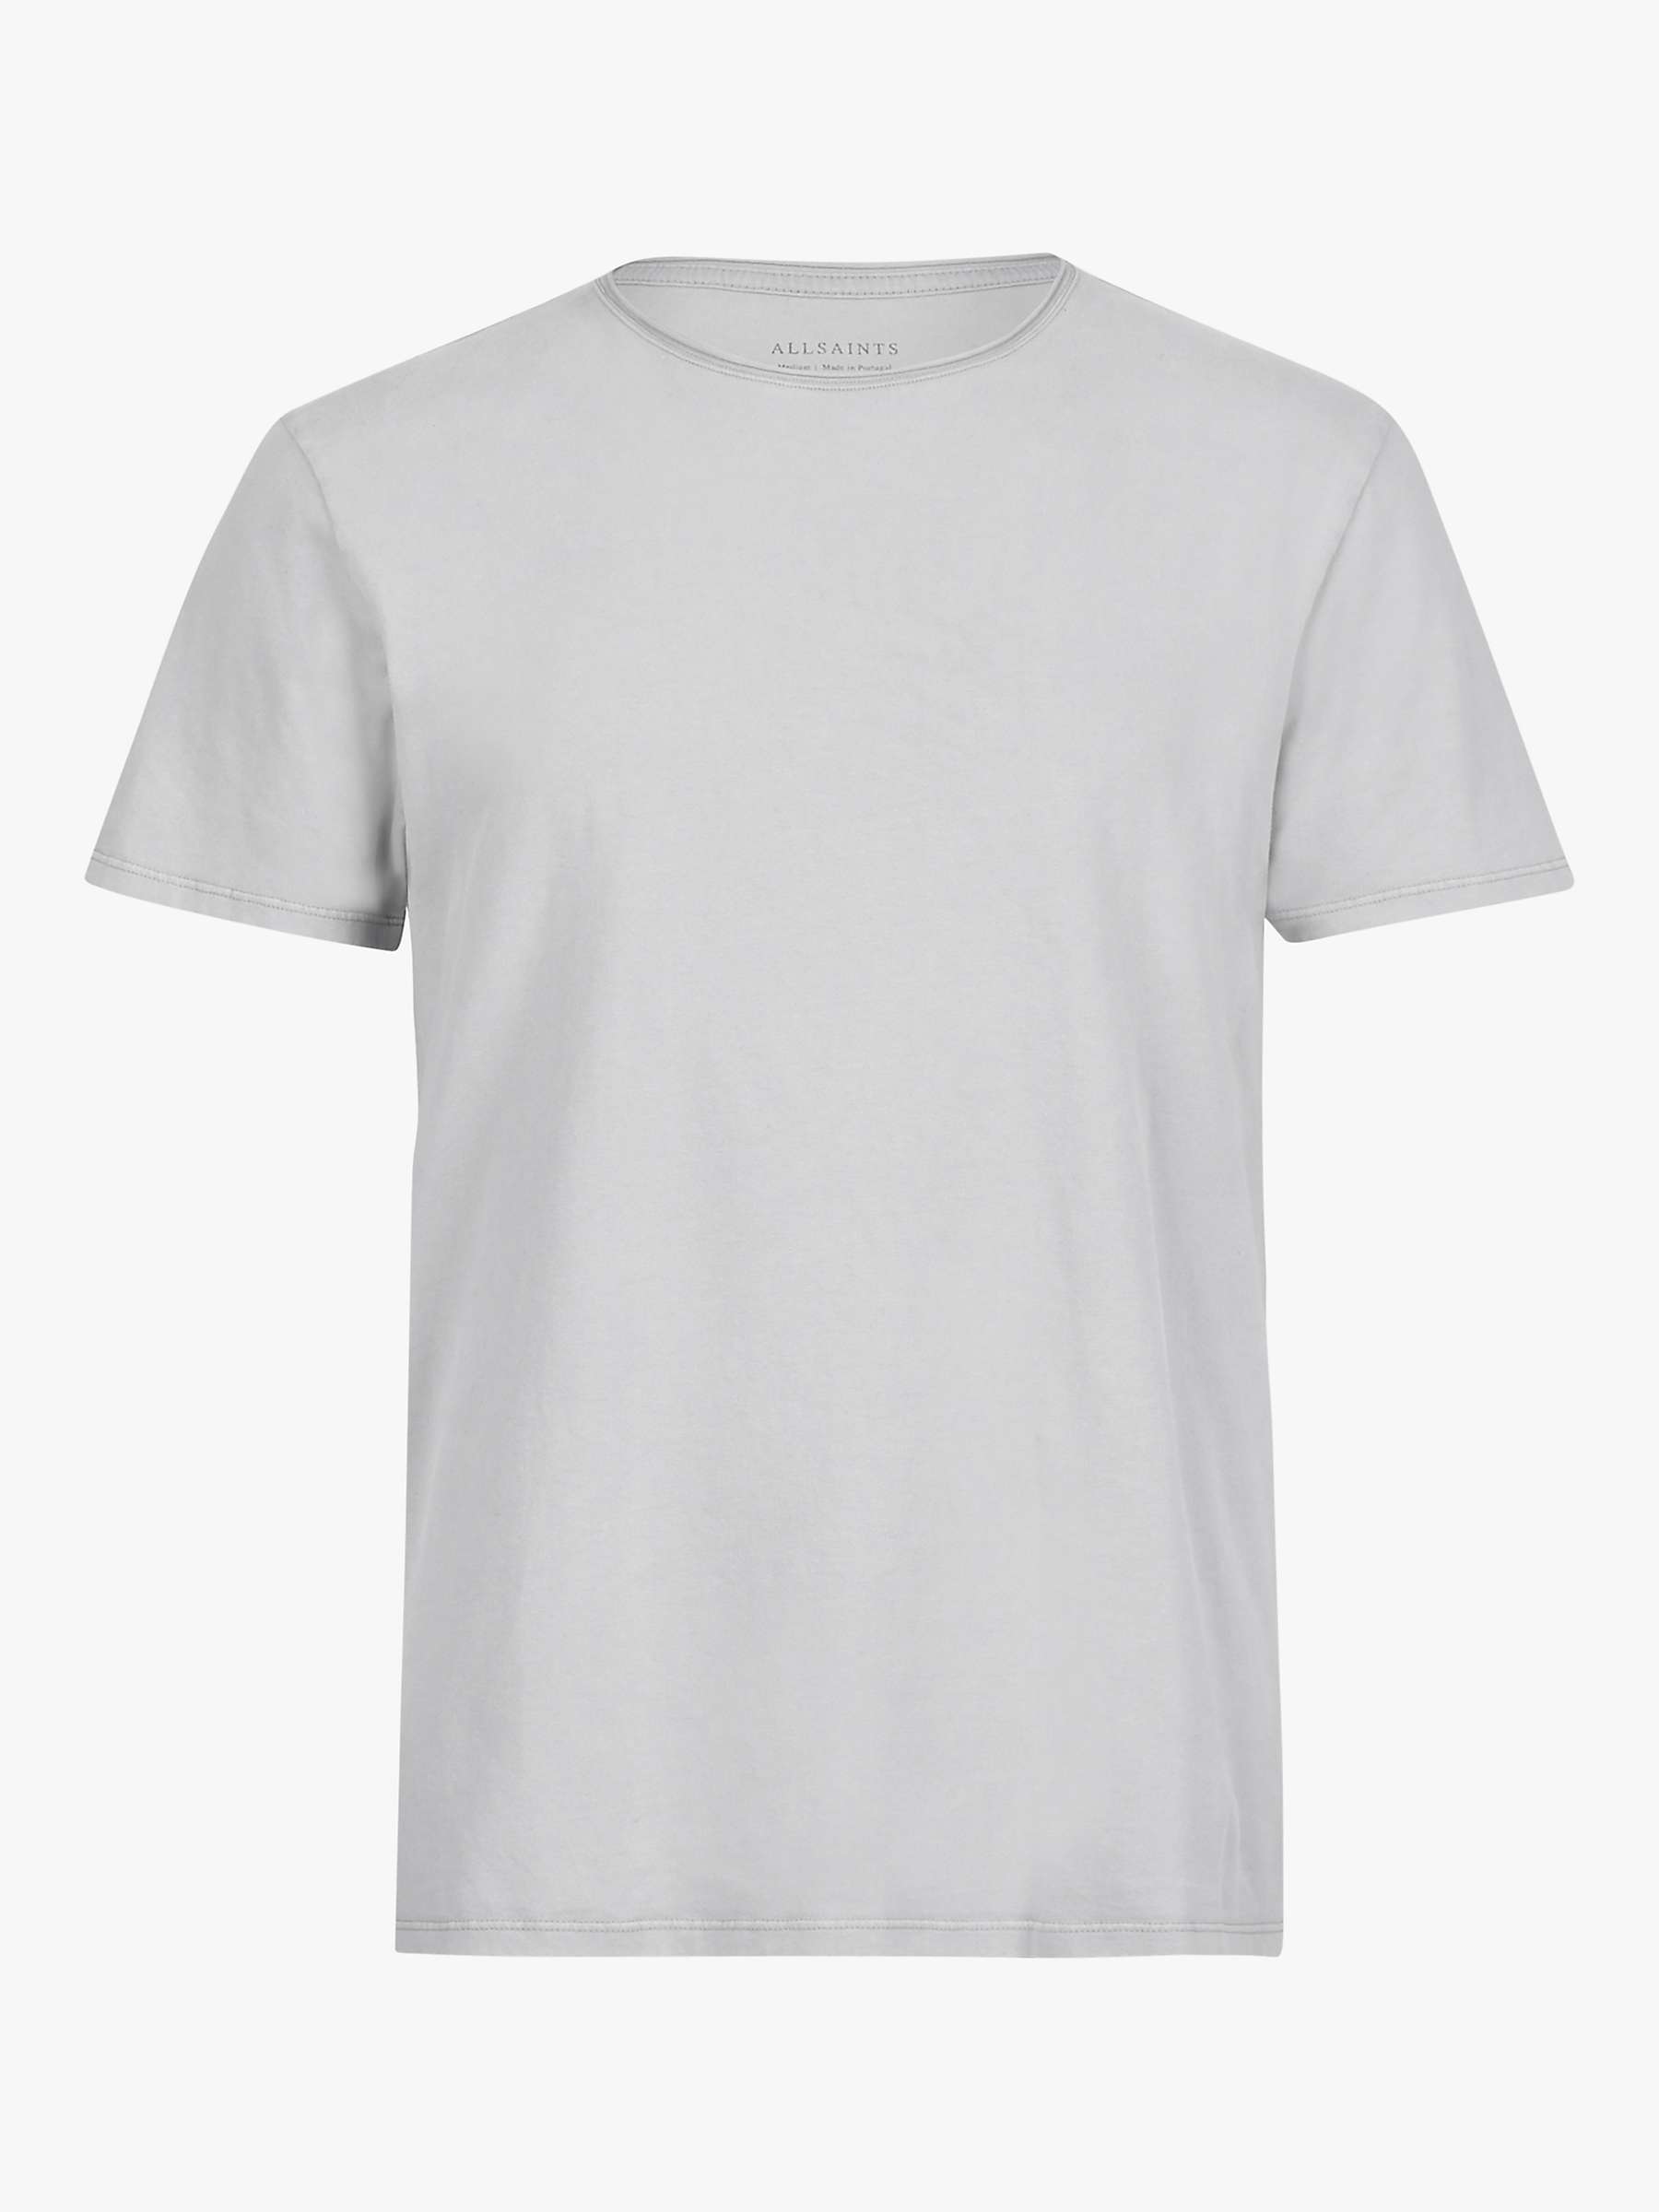 Buy AllSaints Bodega Crew T-Shirt Online at johnlewis.com